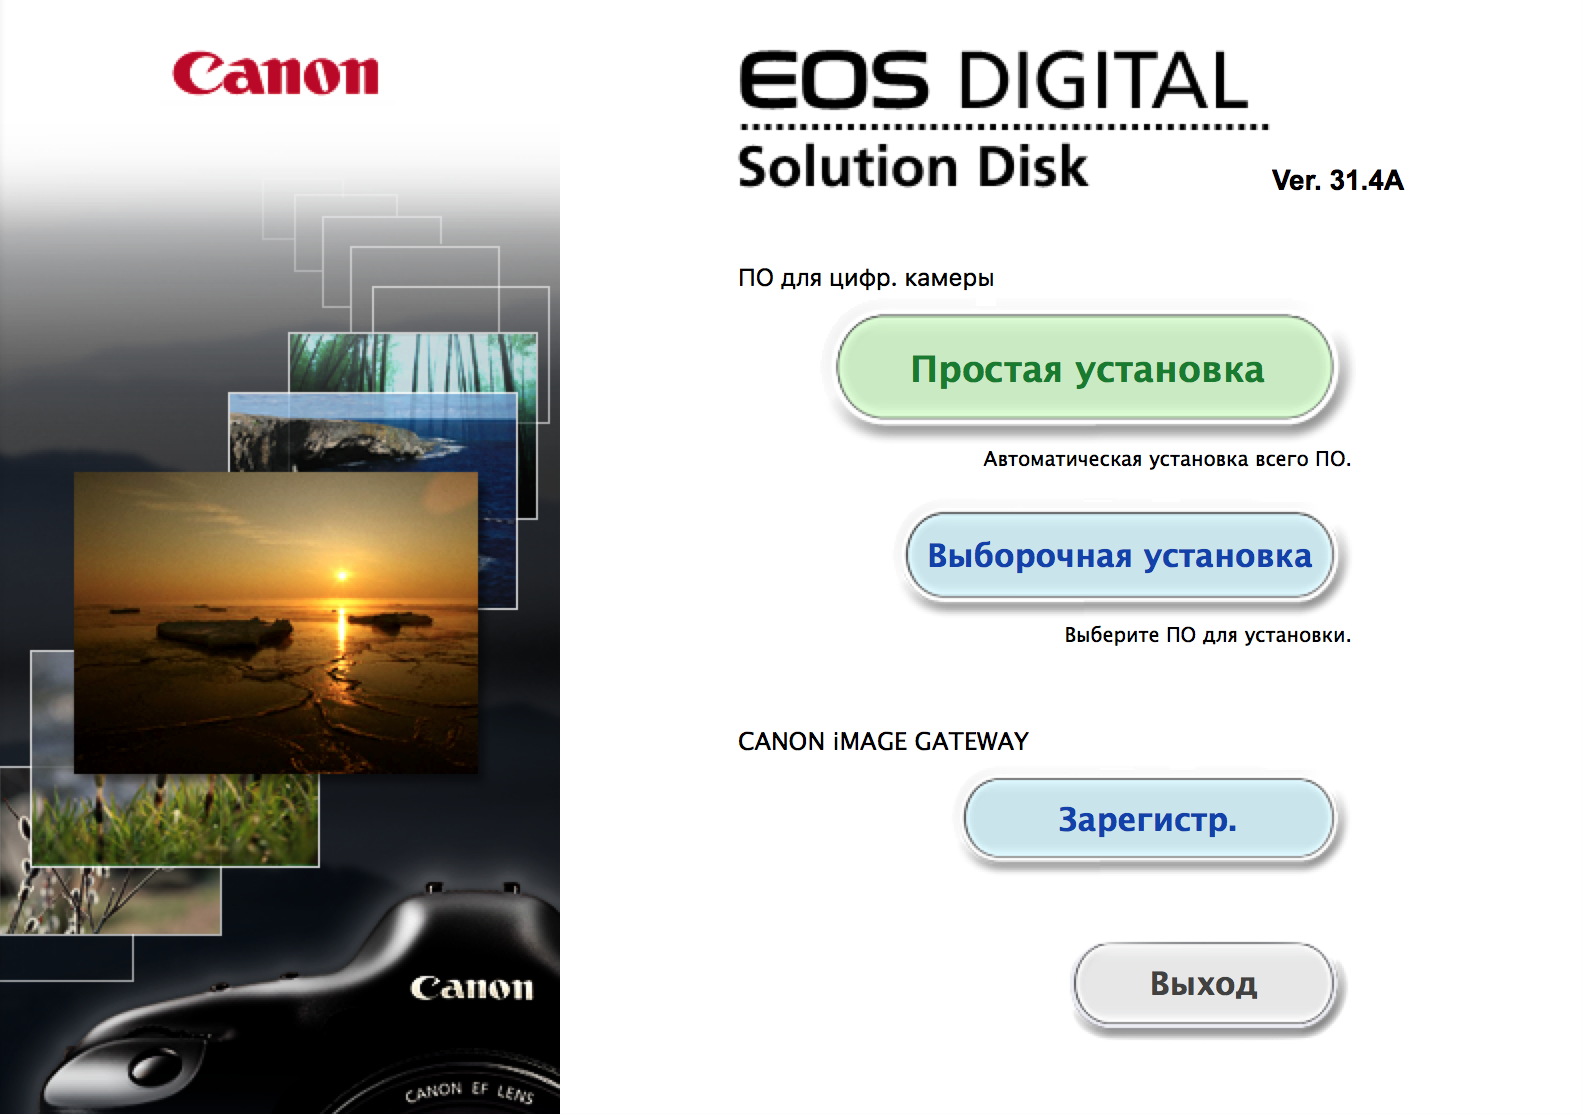 Canon EOS Digital Solution Disk 31.4A